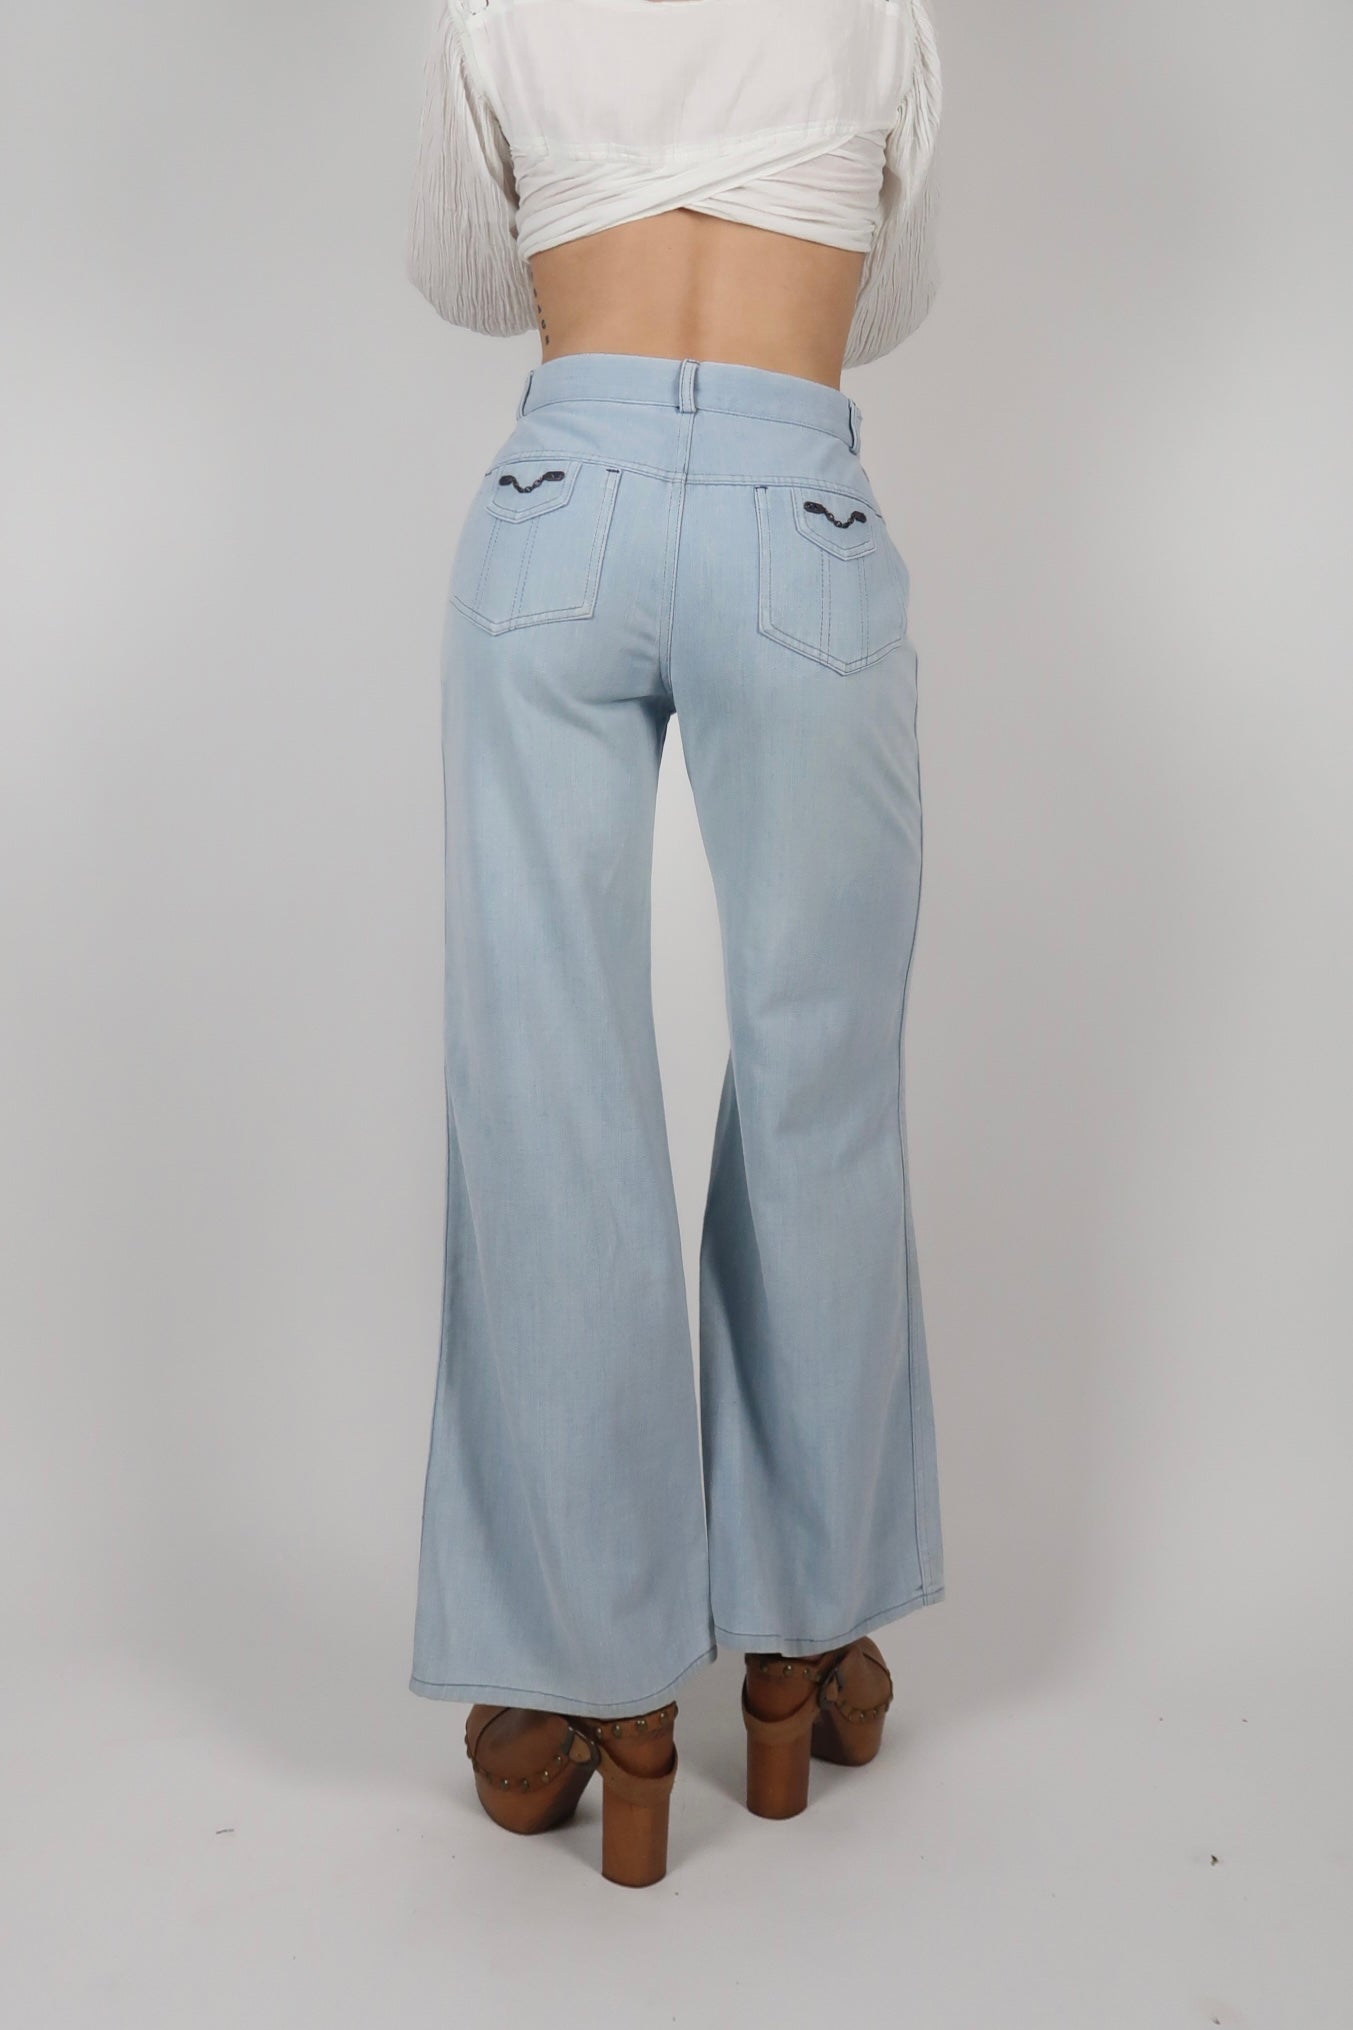 1970s lightwash jeans